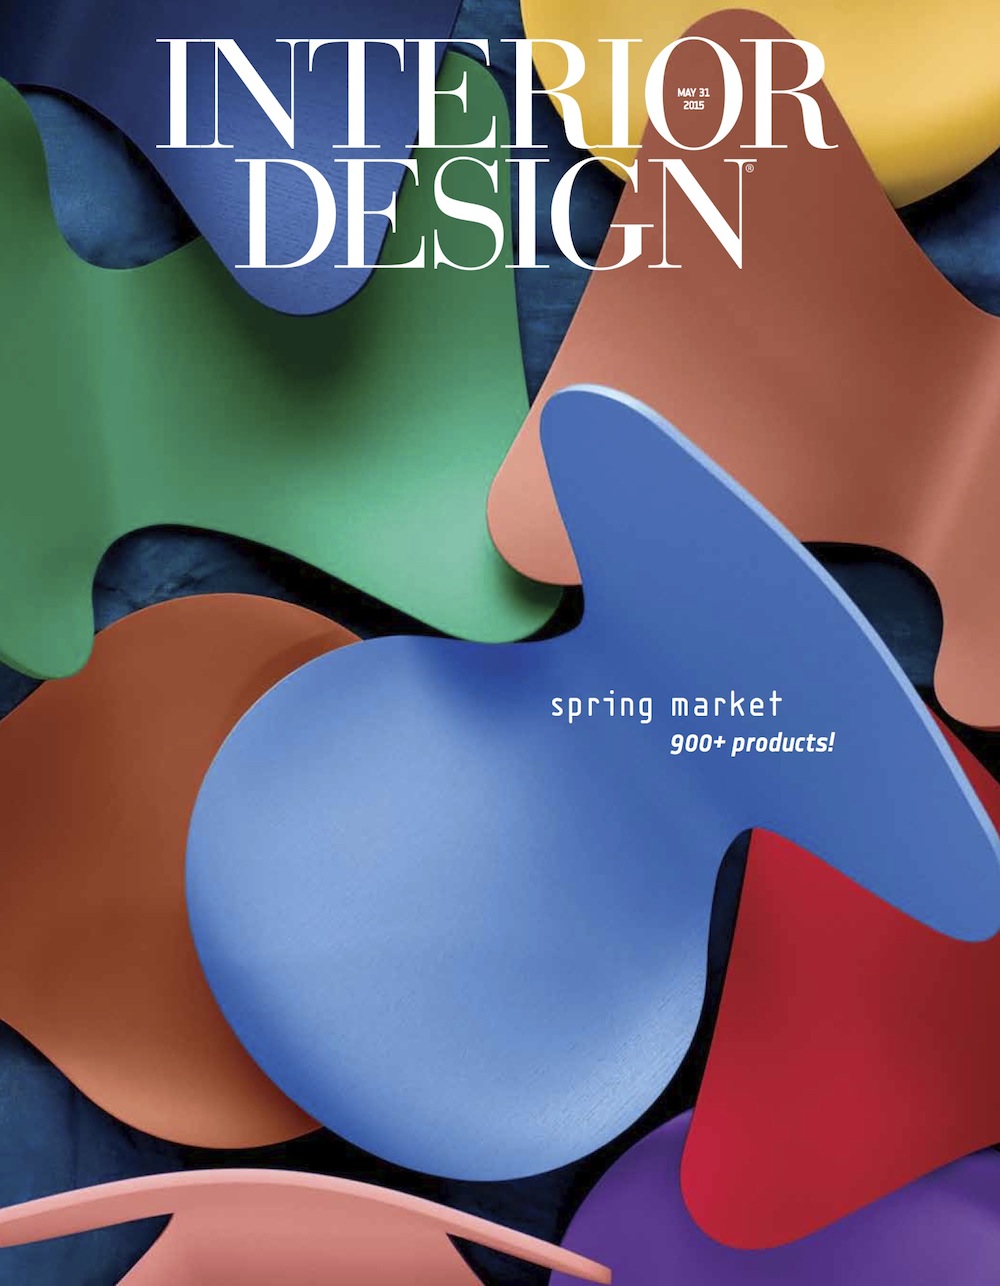 Interior-Design-June-2015-Cover